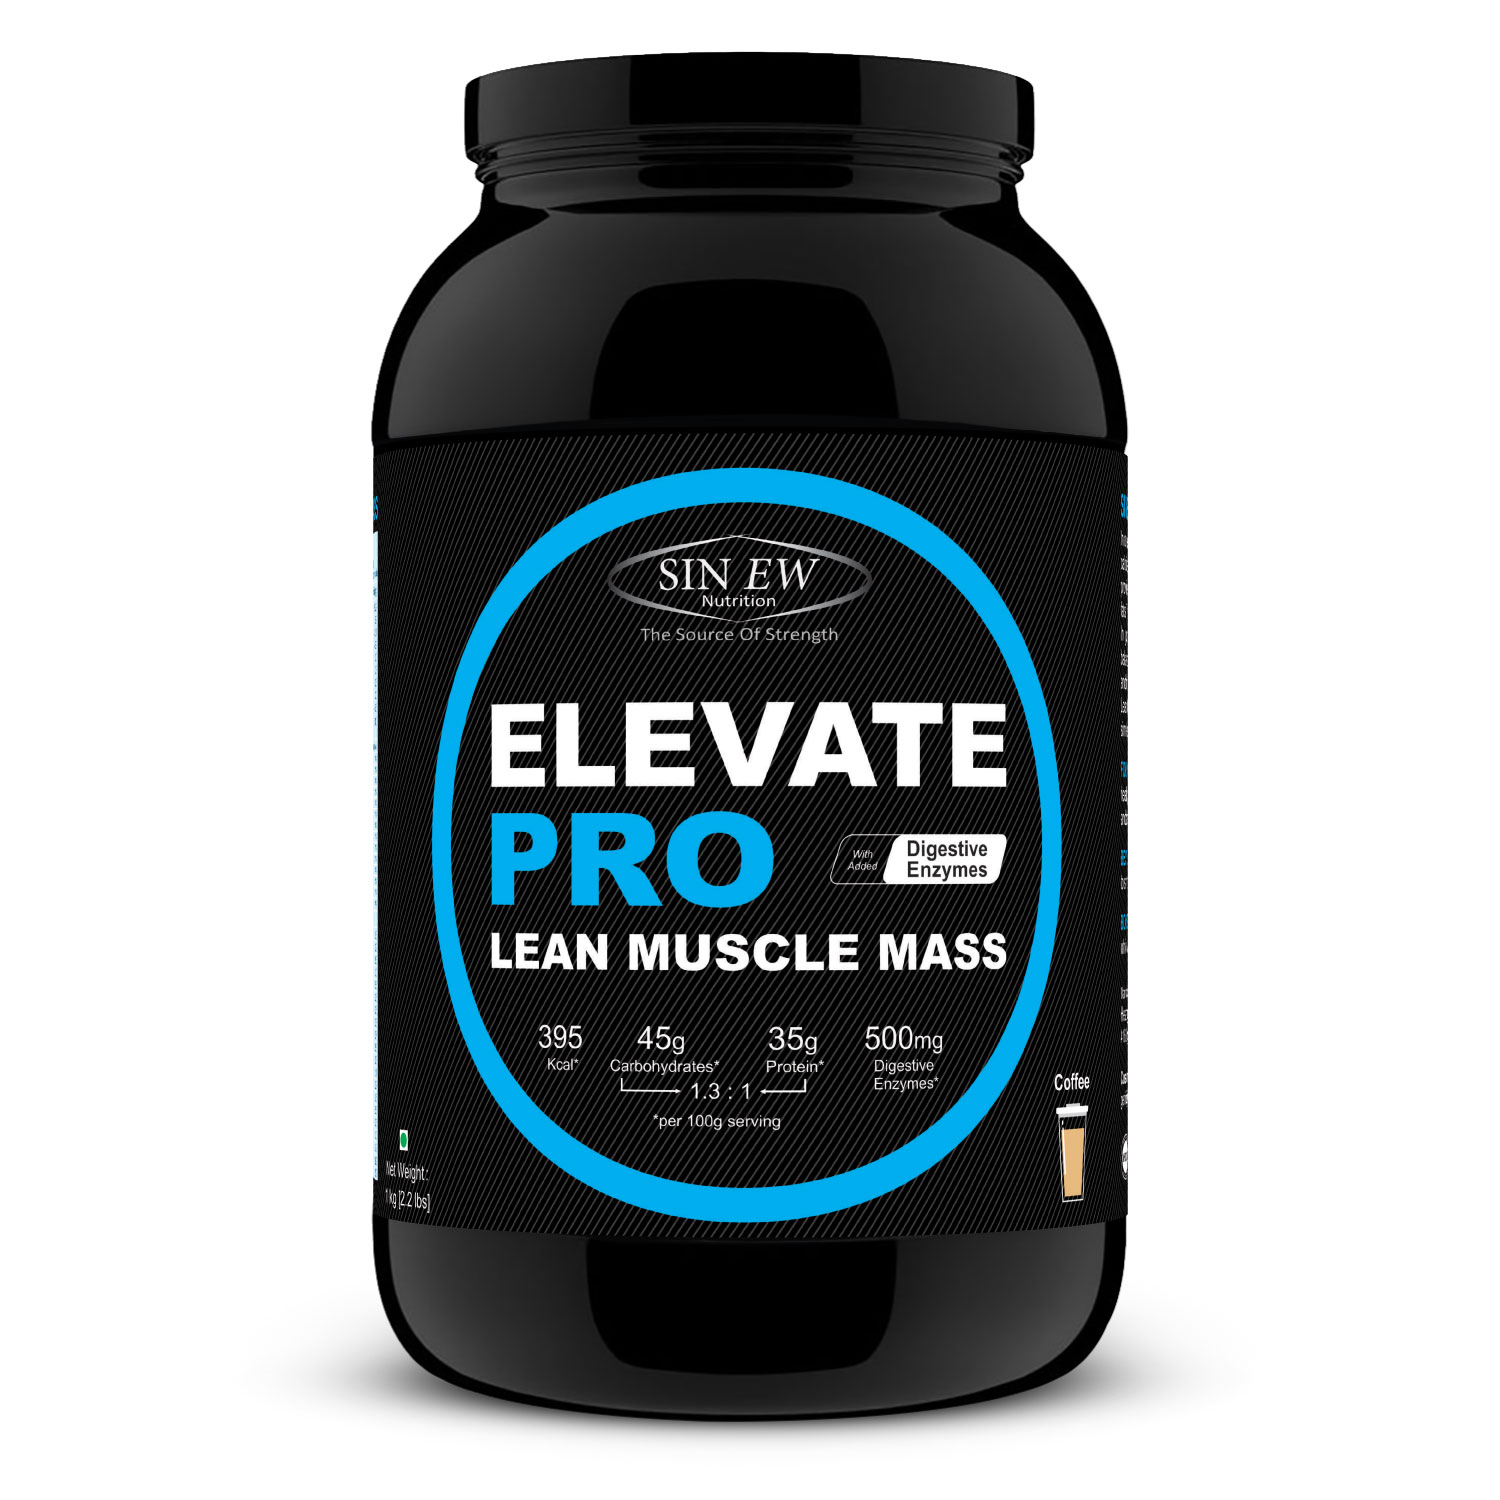 Elevate Pro Lean Muscle Mass (coffee) 1kg F